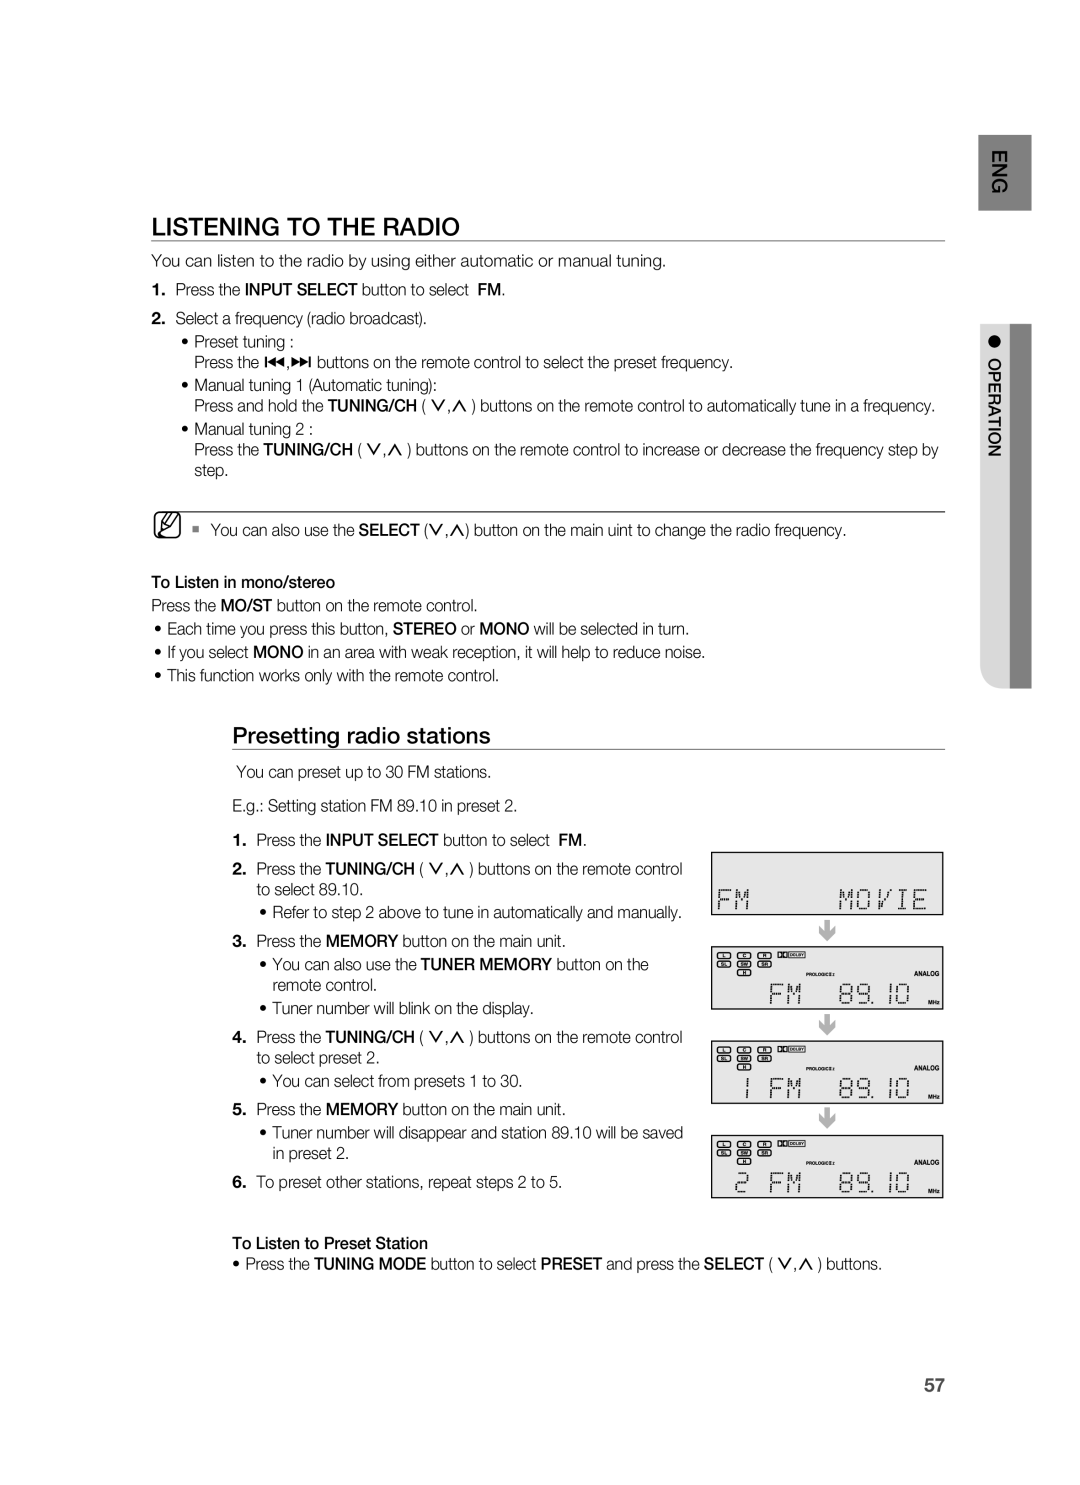 Samsung HW-C900-XAA user manual Listening To The Radio, Presetting radio stations 